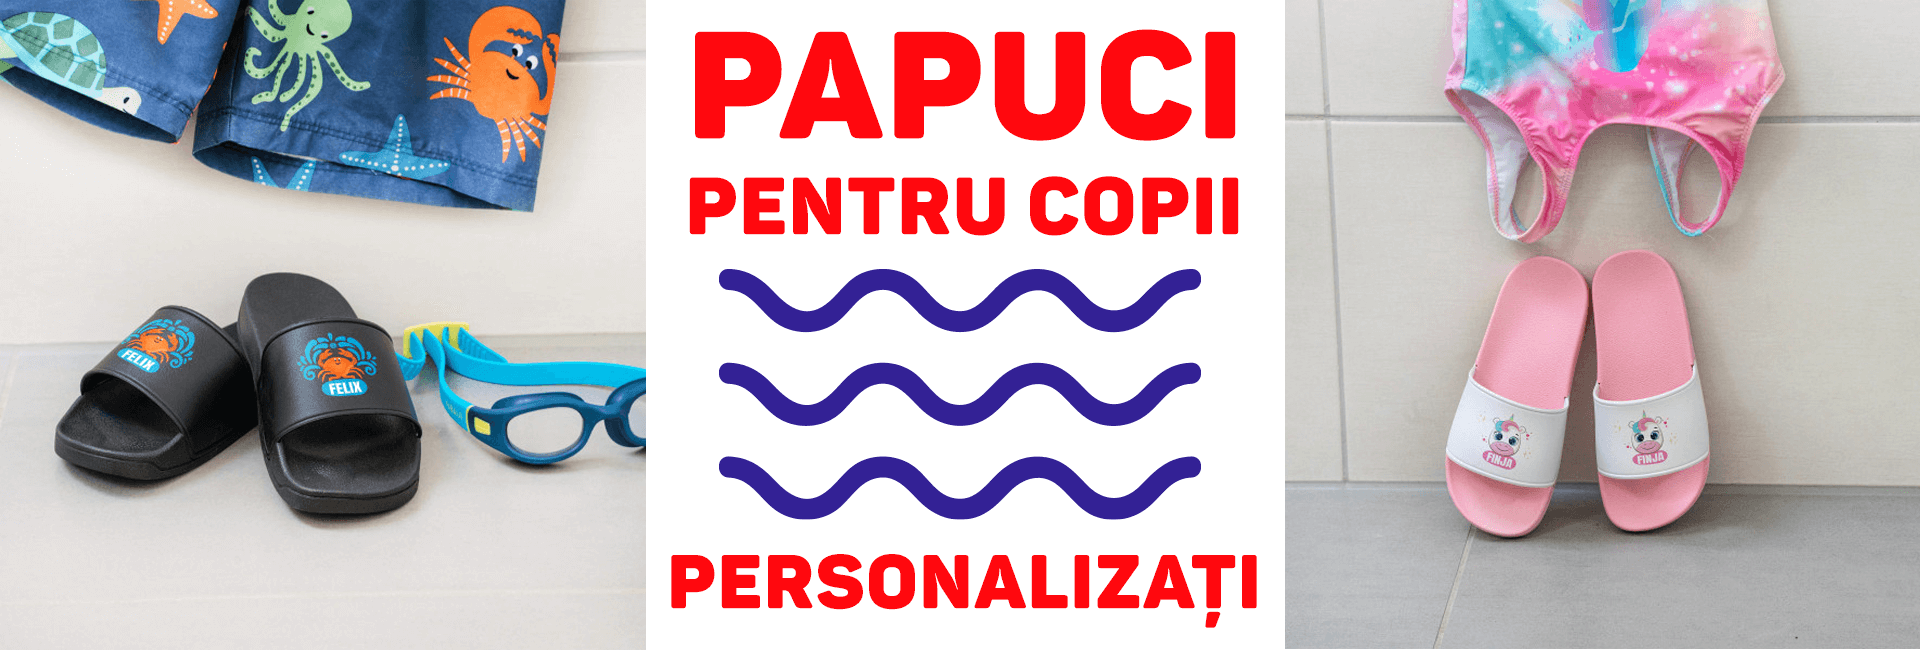 Banner Papuci Copii